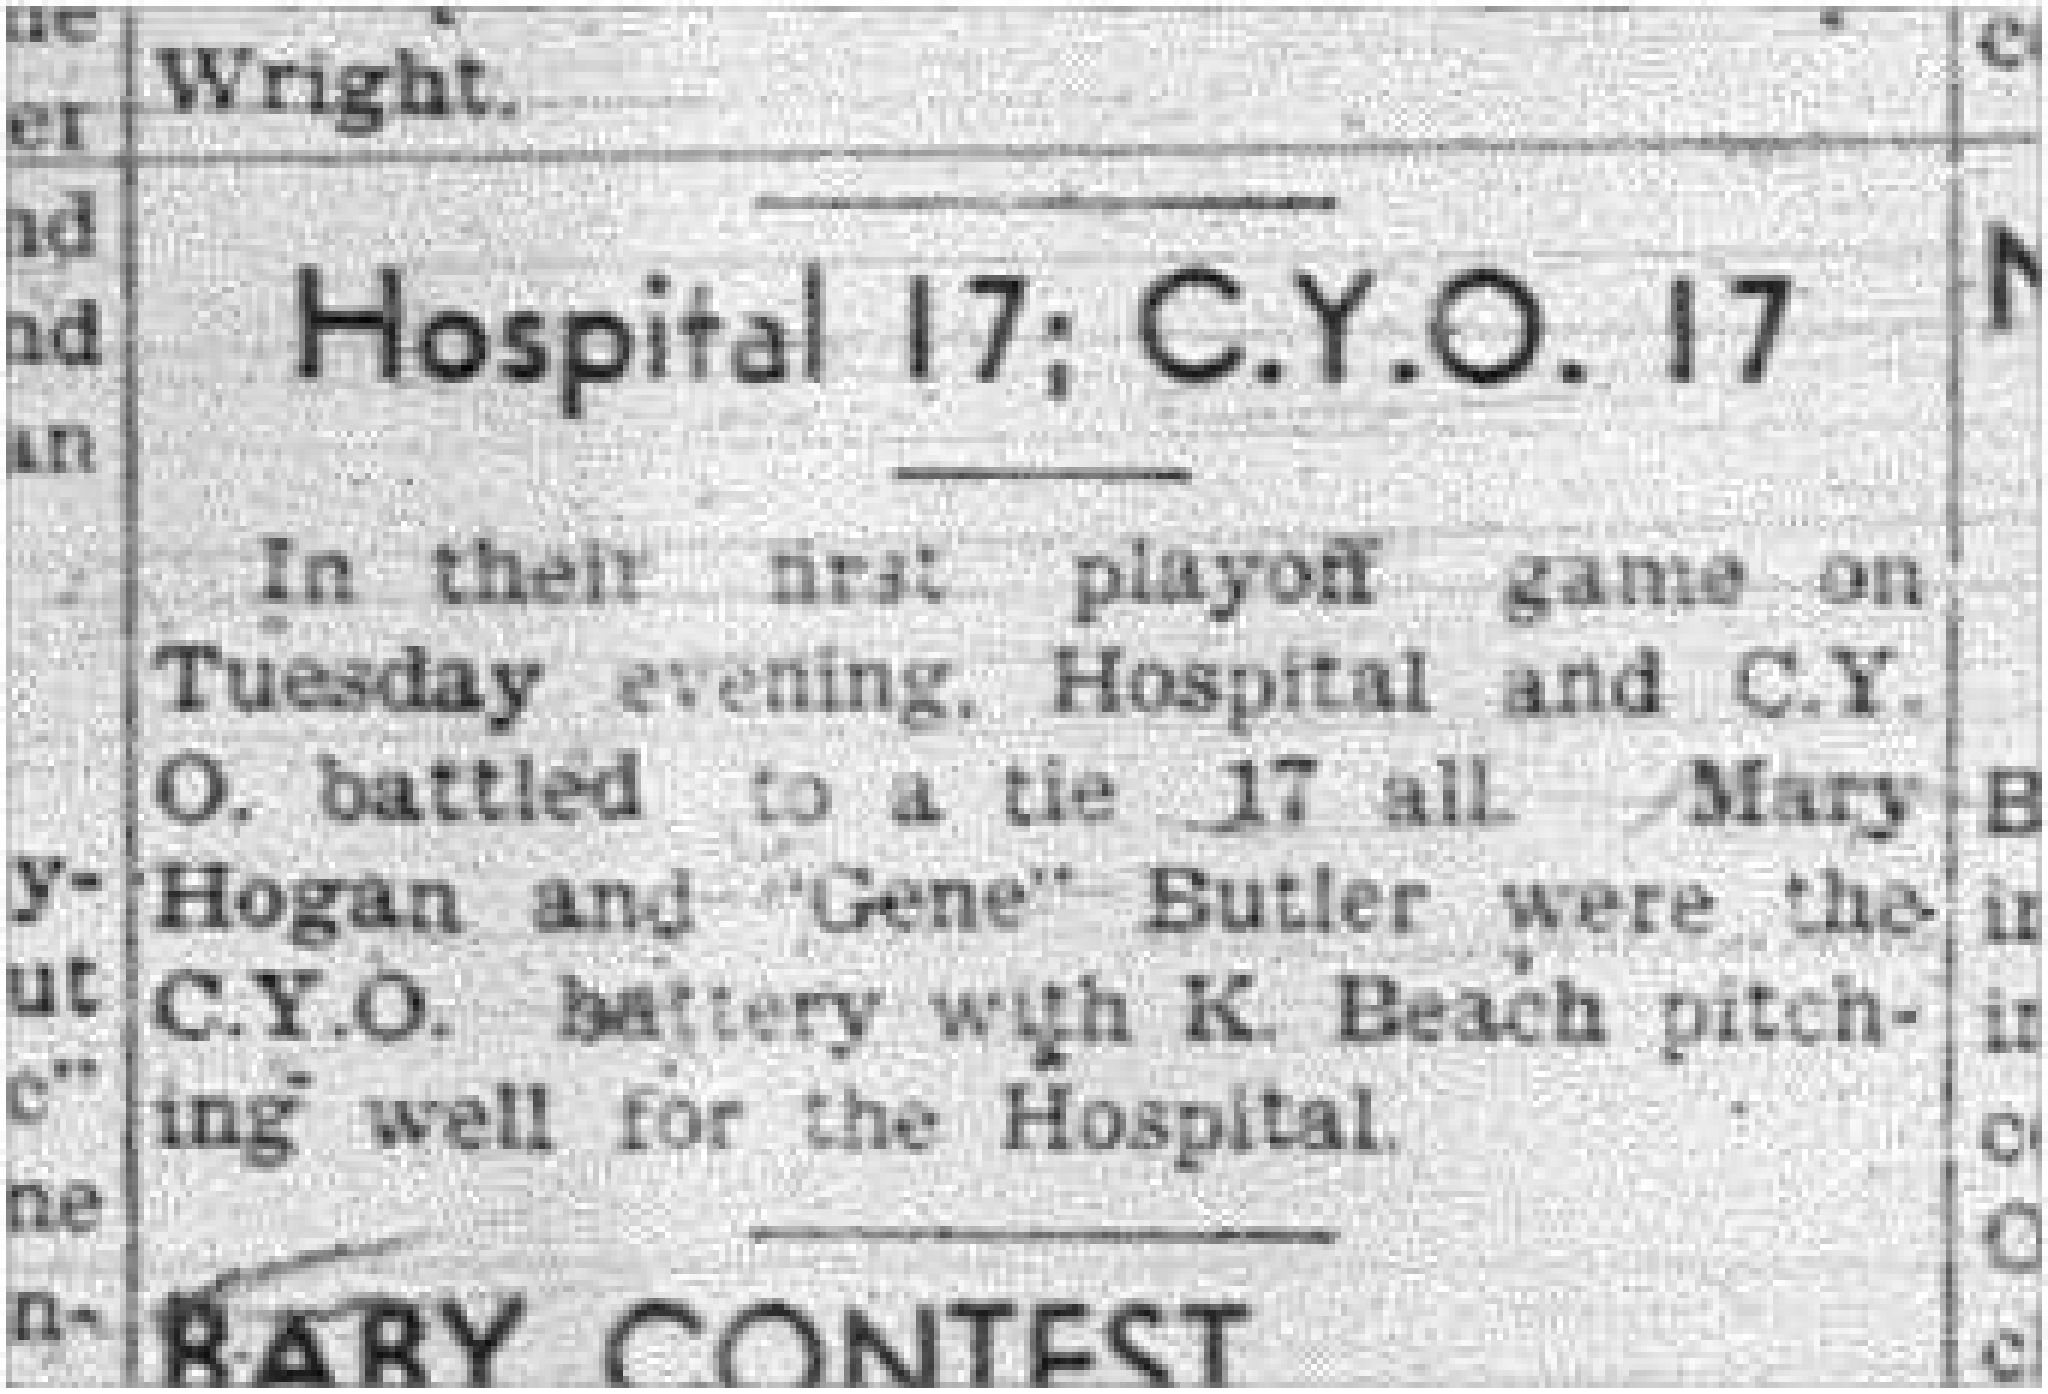 1943-08-19 Softball - Girls Hospital vs CYO